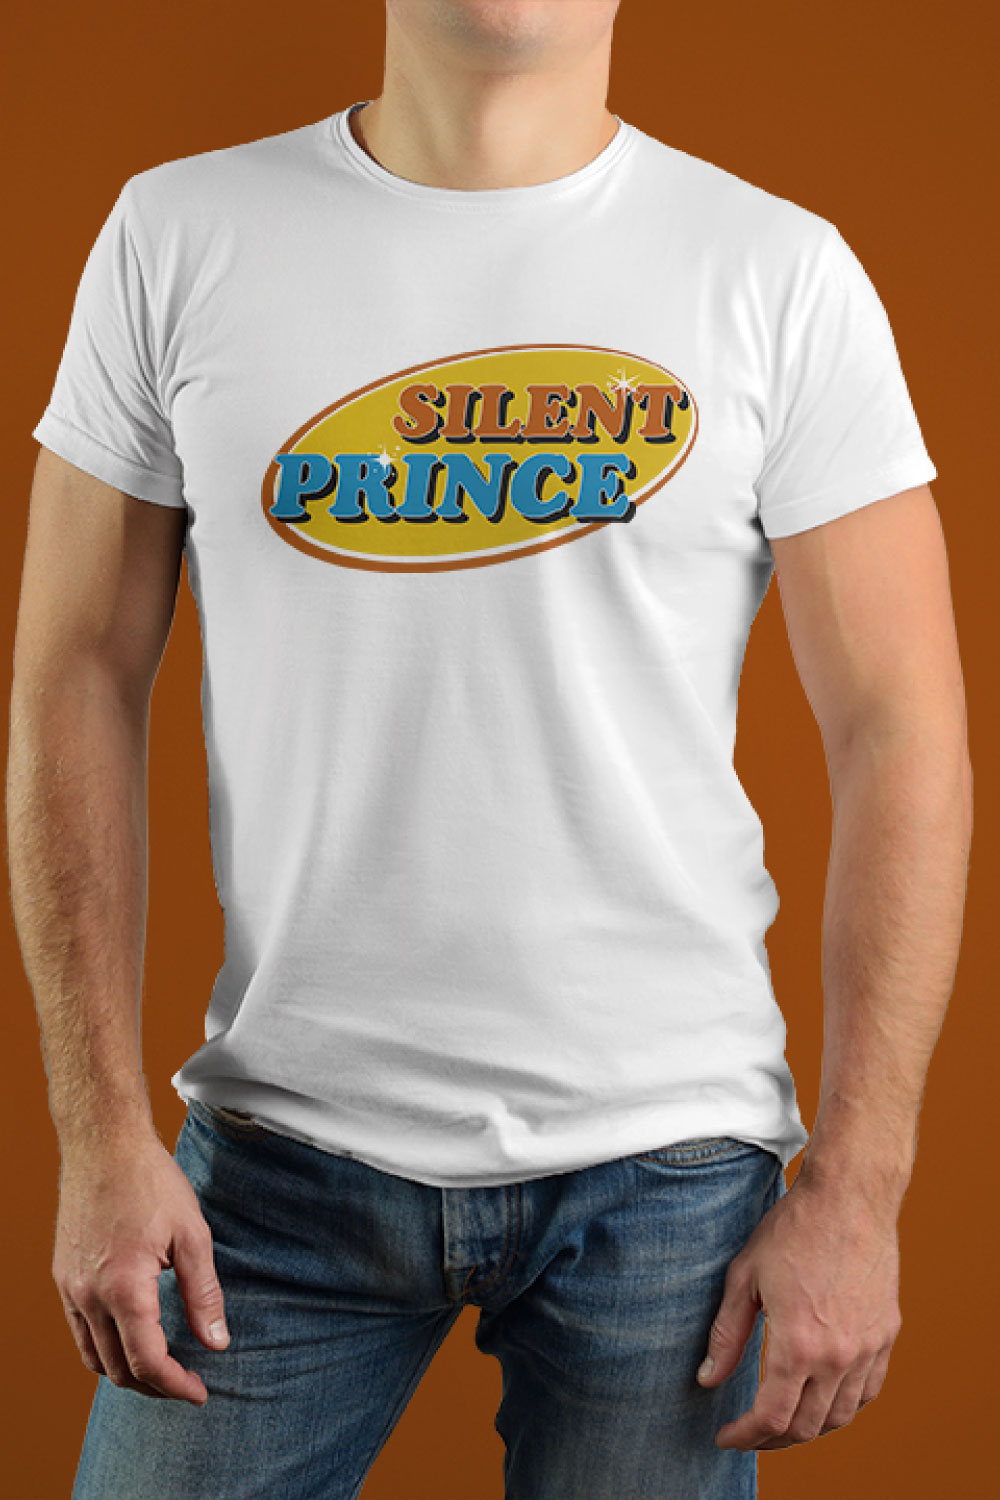 Silent Prince T Shirt Design pinterest preview image.